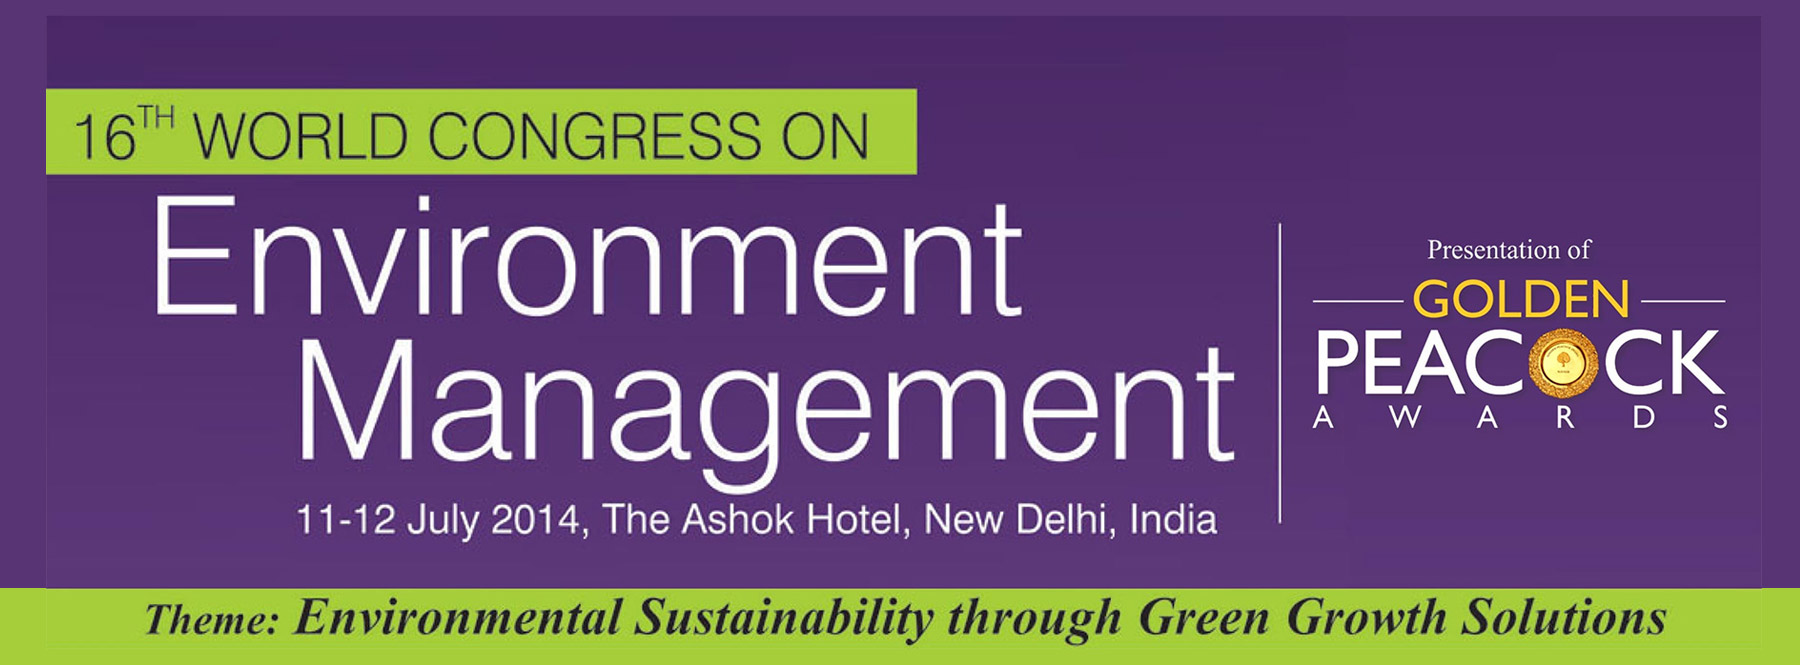 16th World Congress on Environment Management